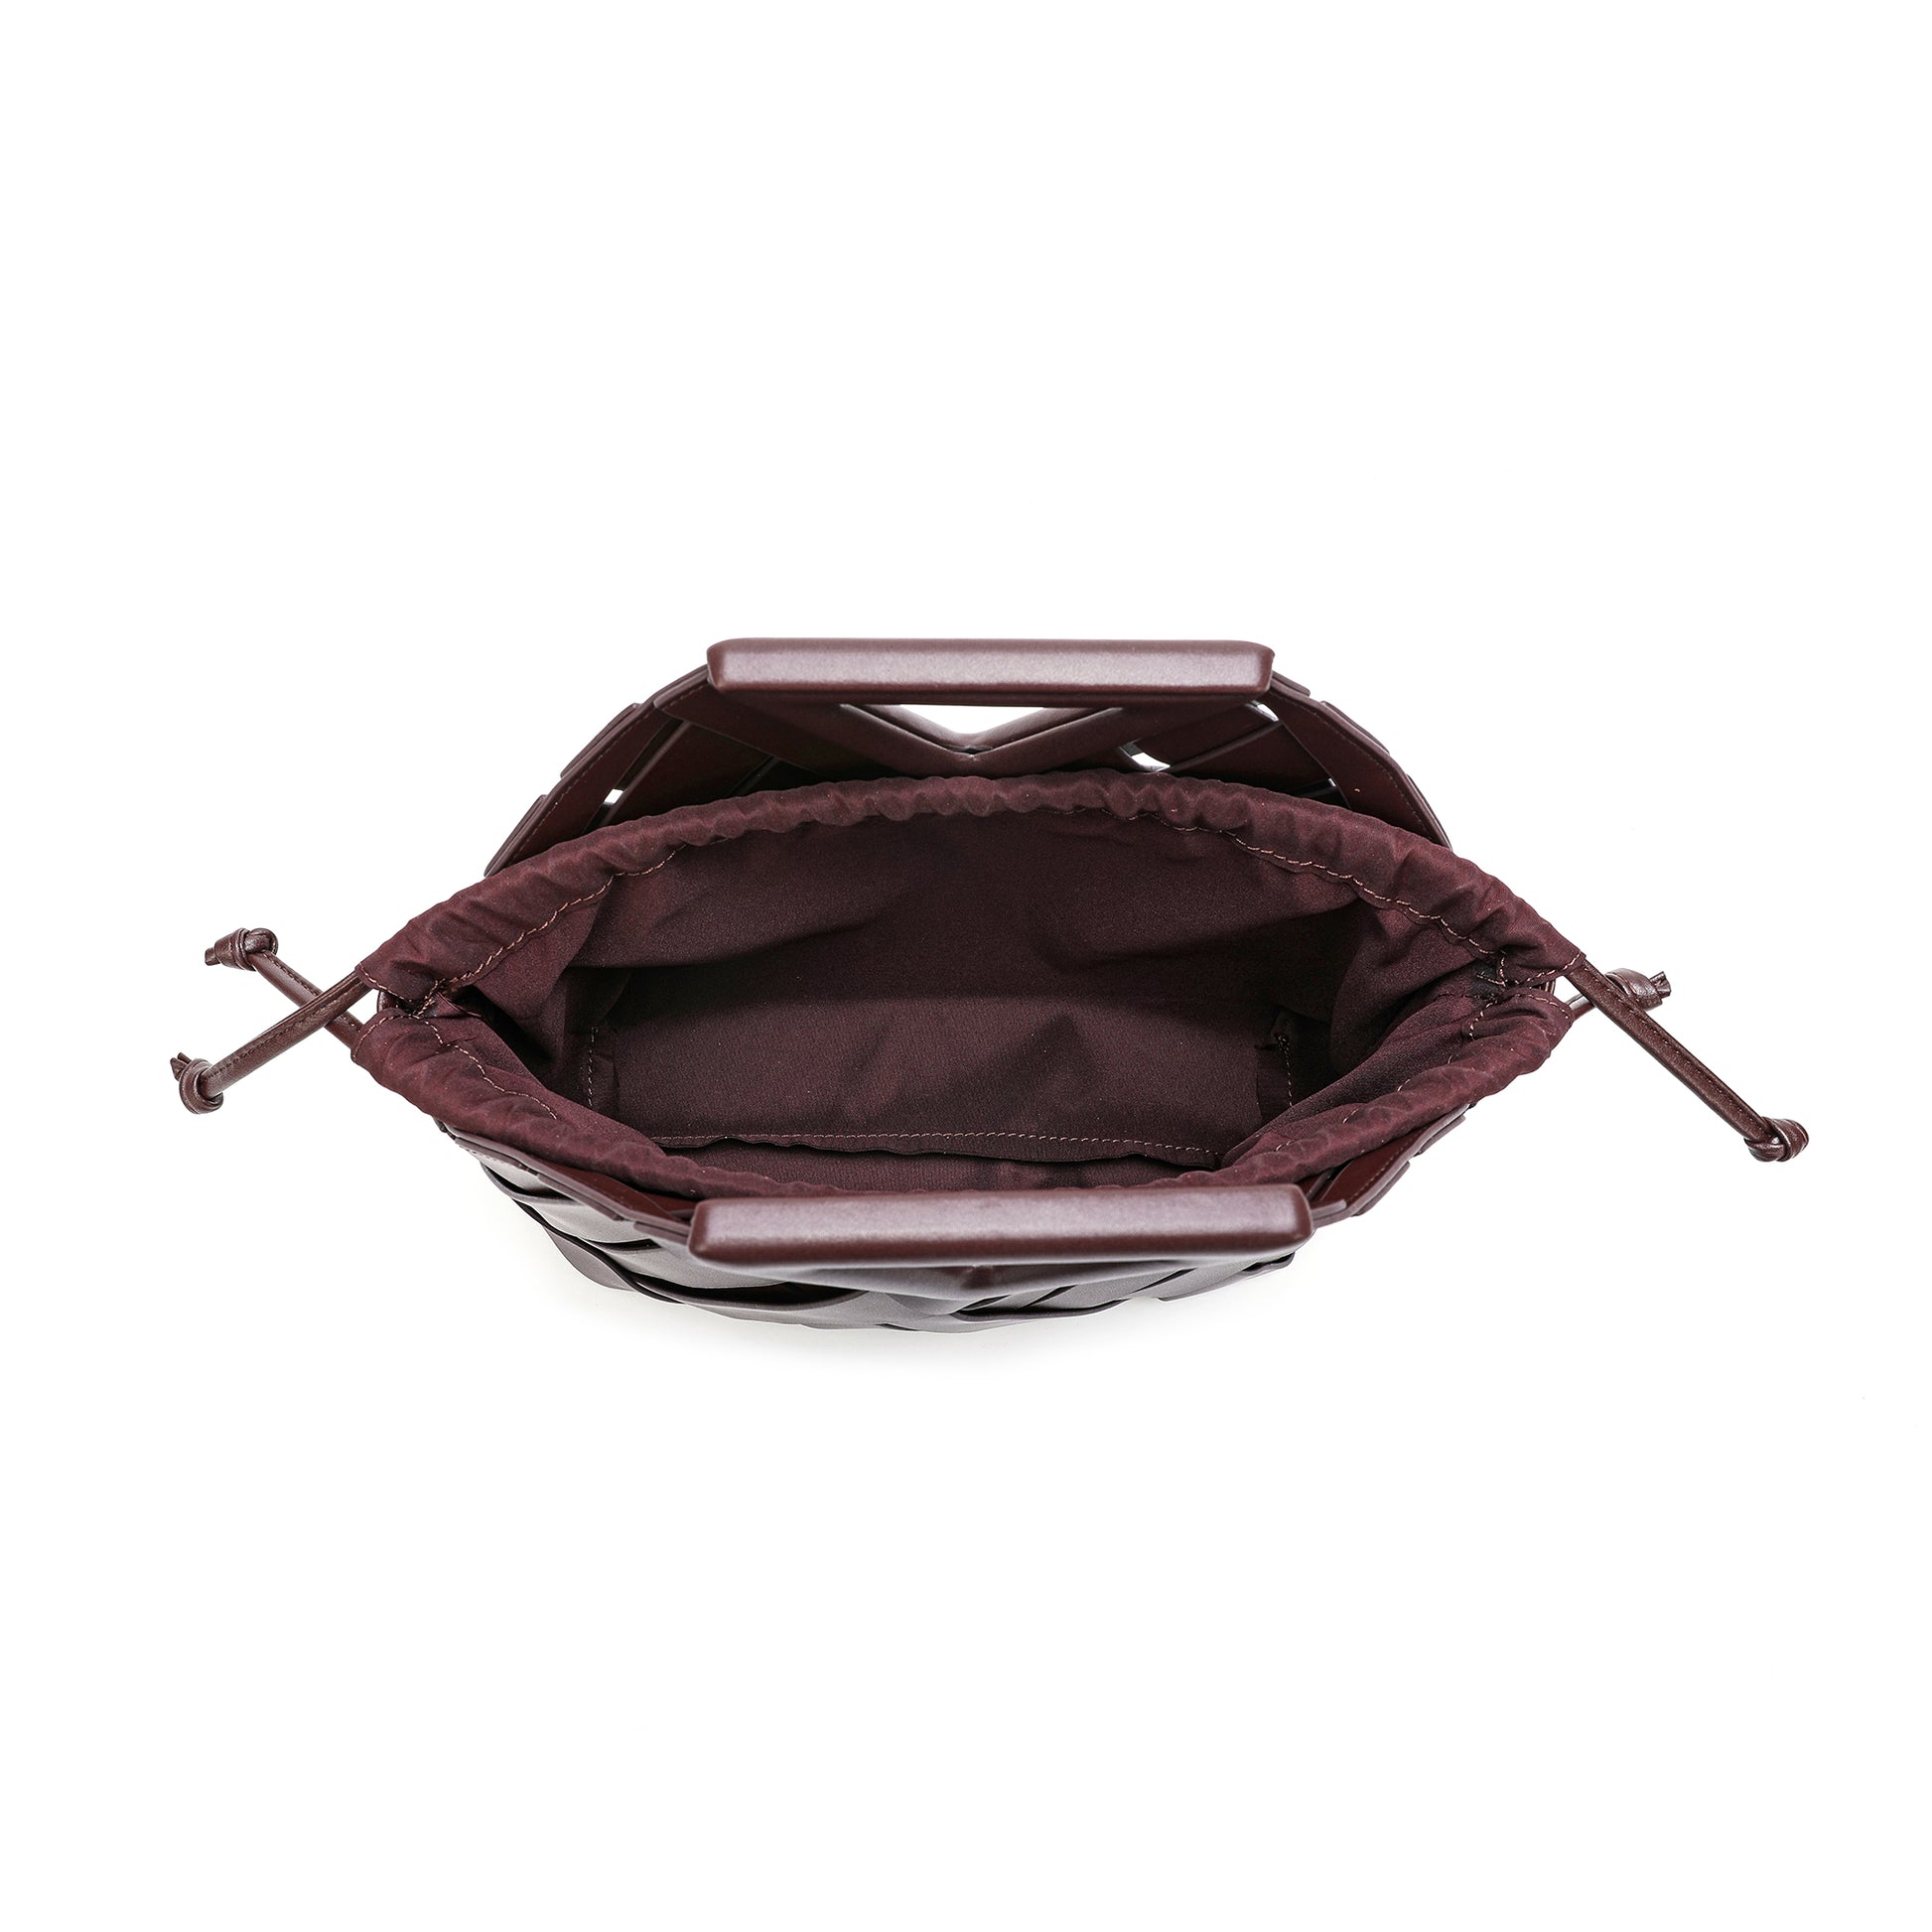 Tiffany - Shoulder Bag Pelletteria New Line sur FORZIERI